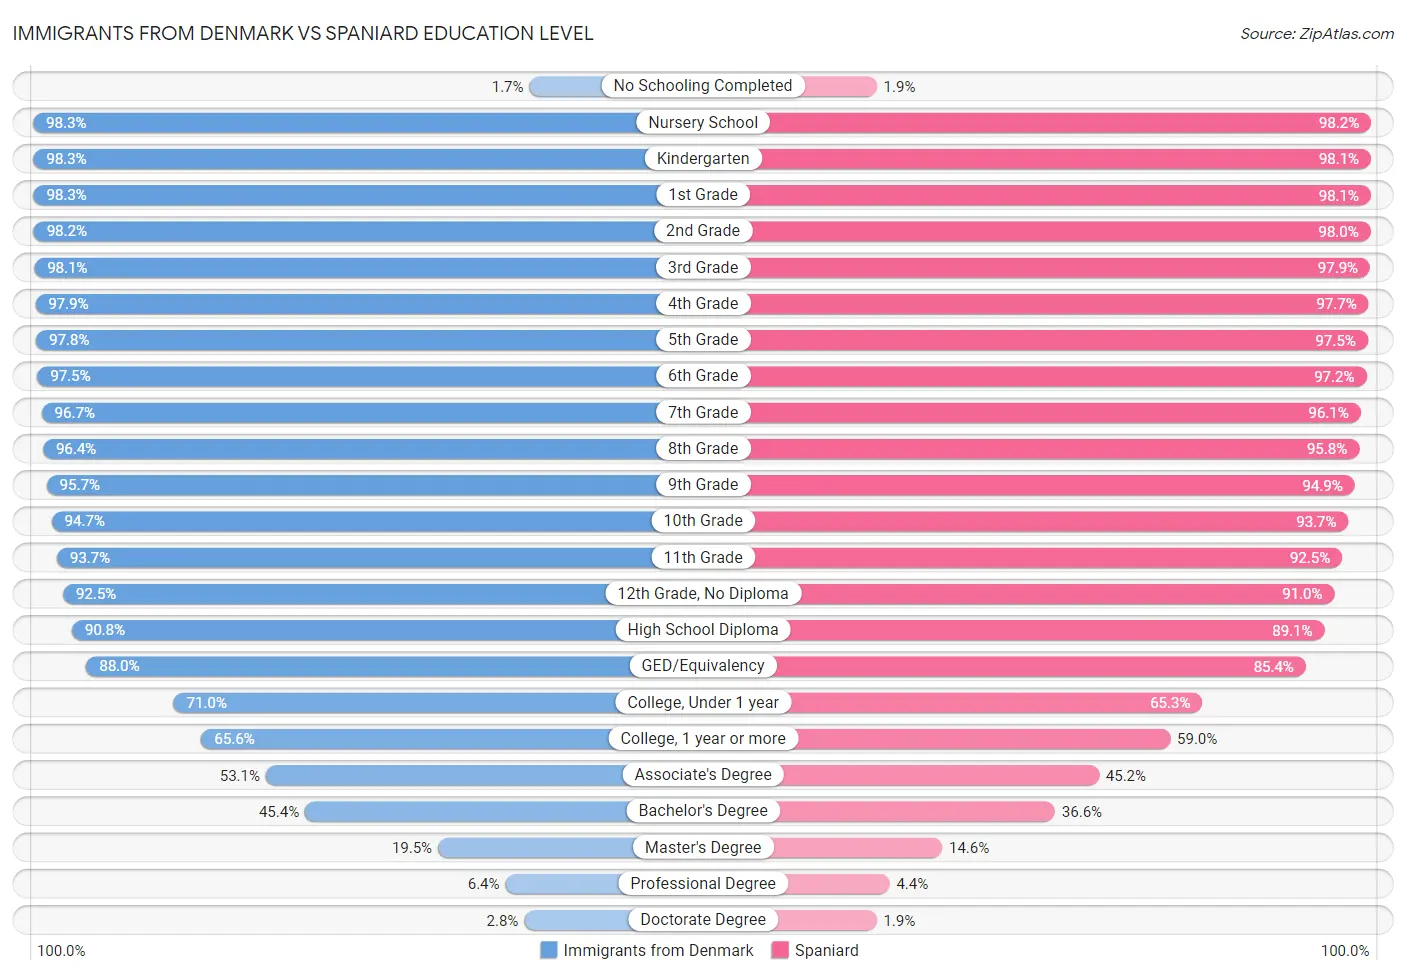 Immigrants from Denmark vs Spaniard Education Level